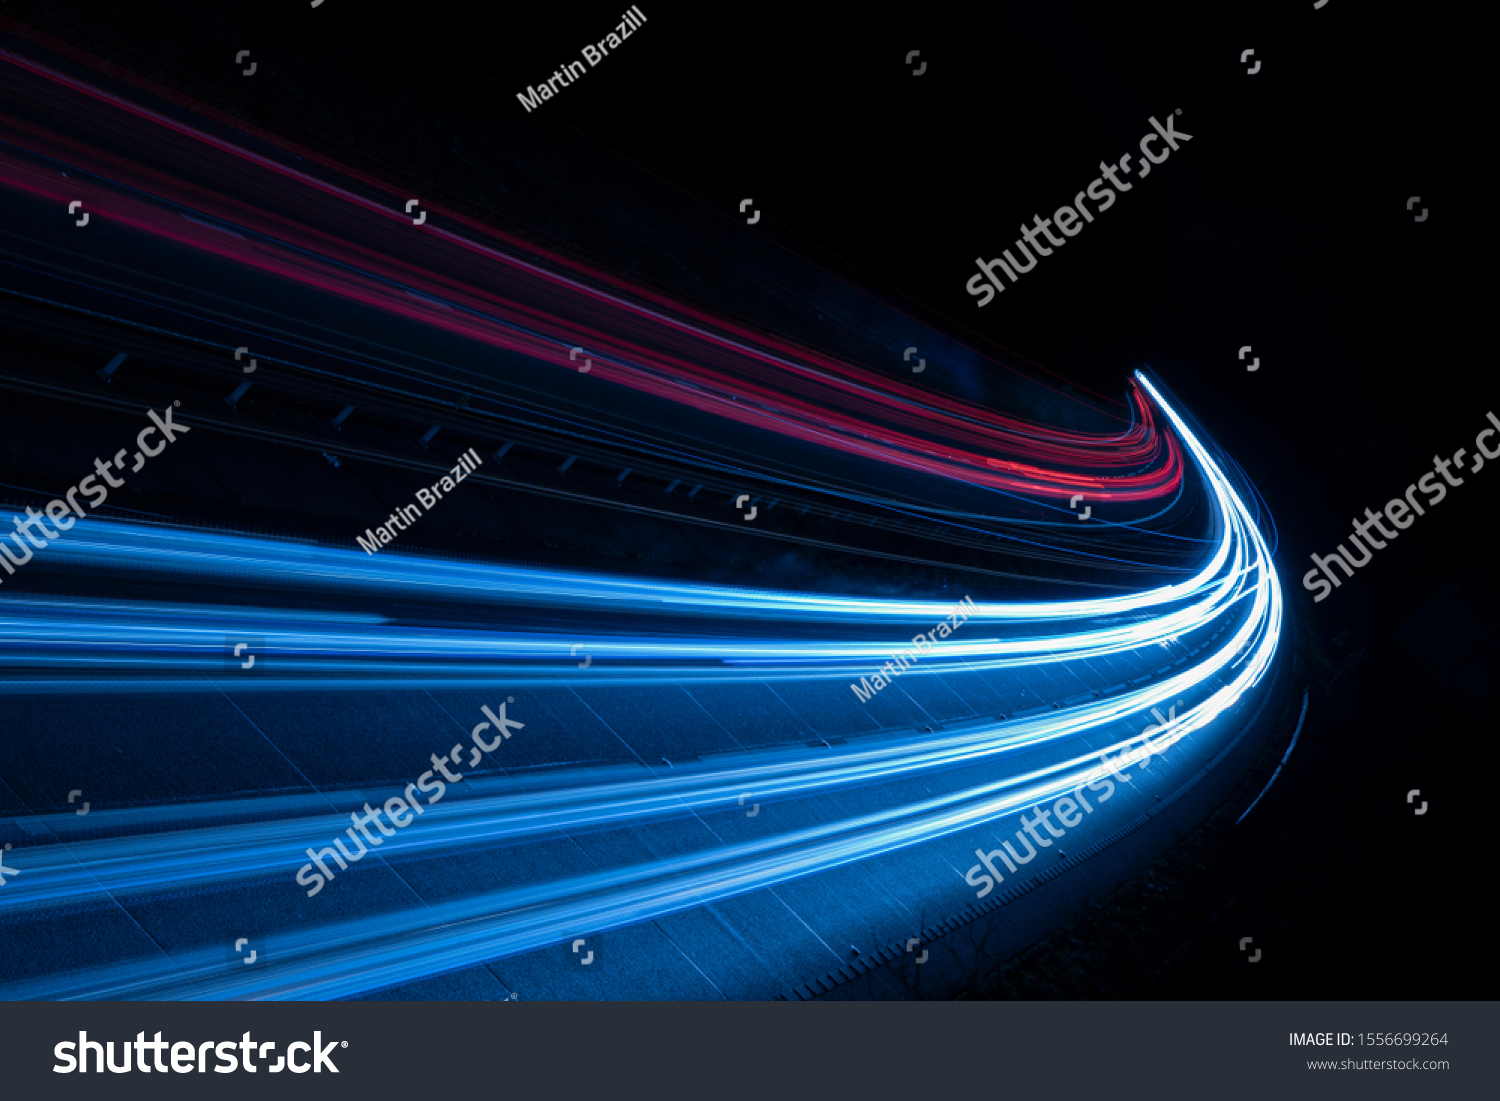 Stream of light trails on motorway at night #1556699264